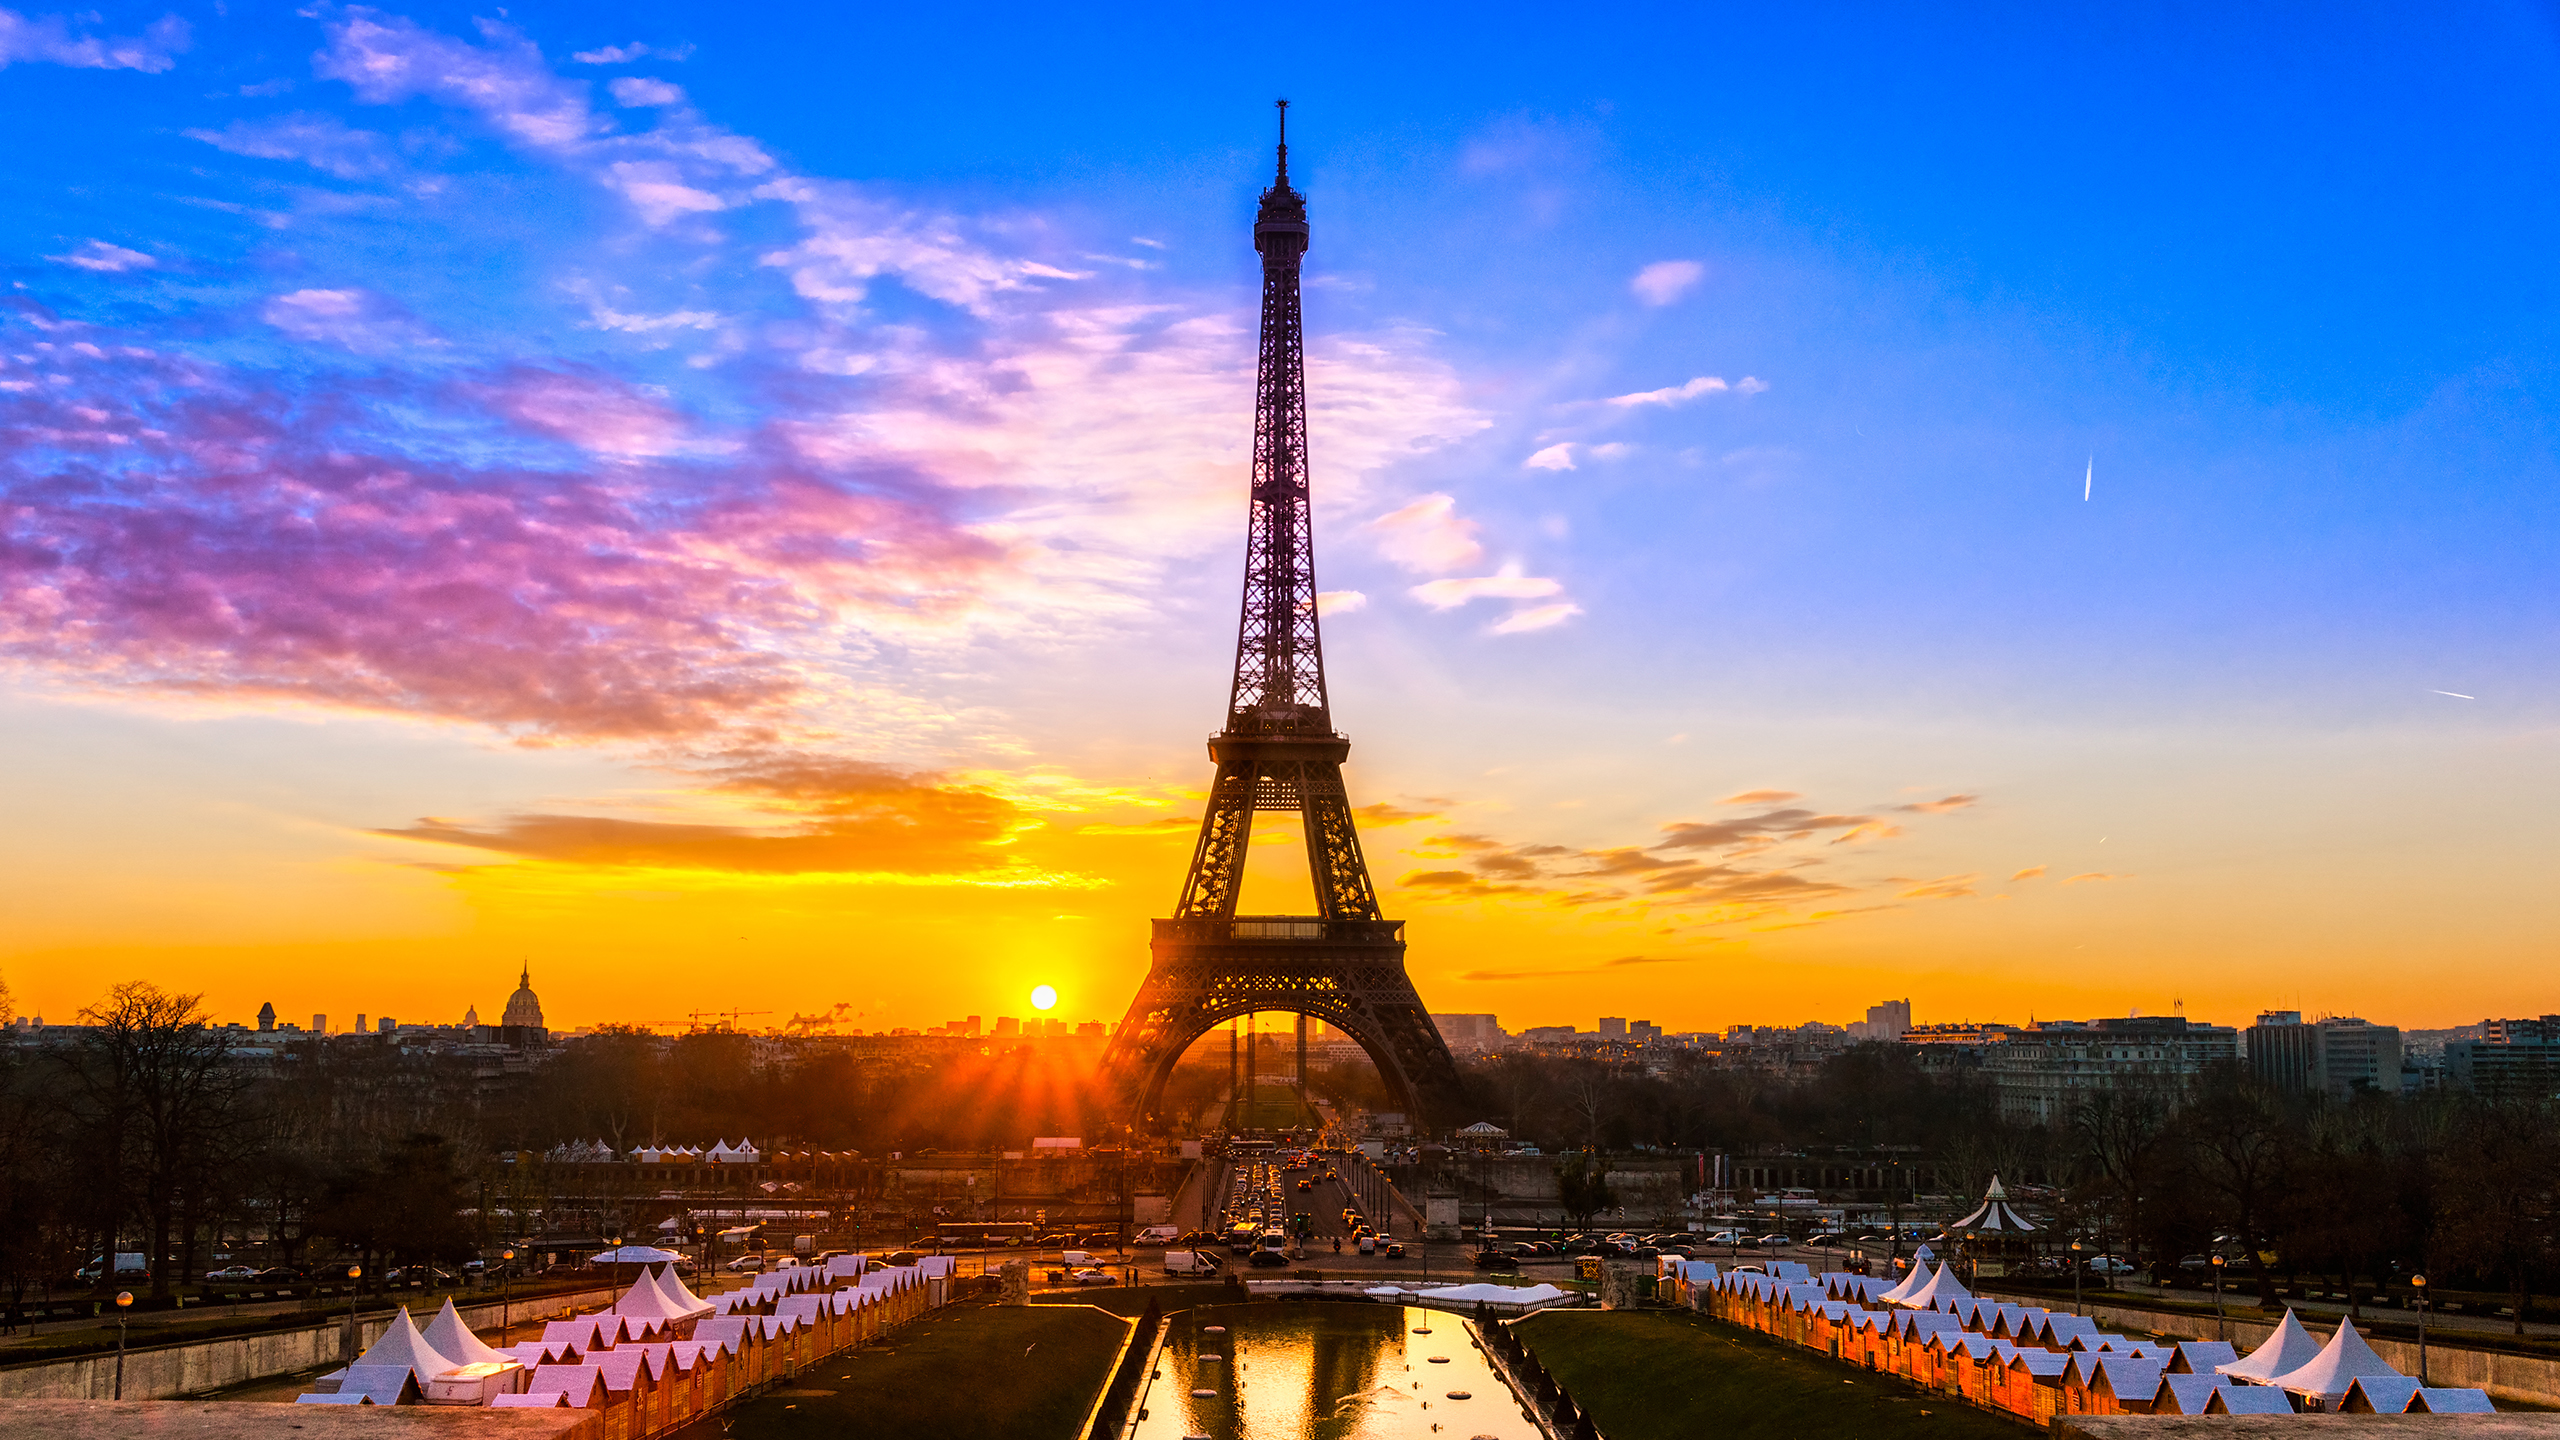 Eiffel tower at sunrise, Paris